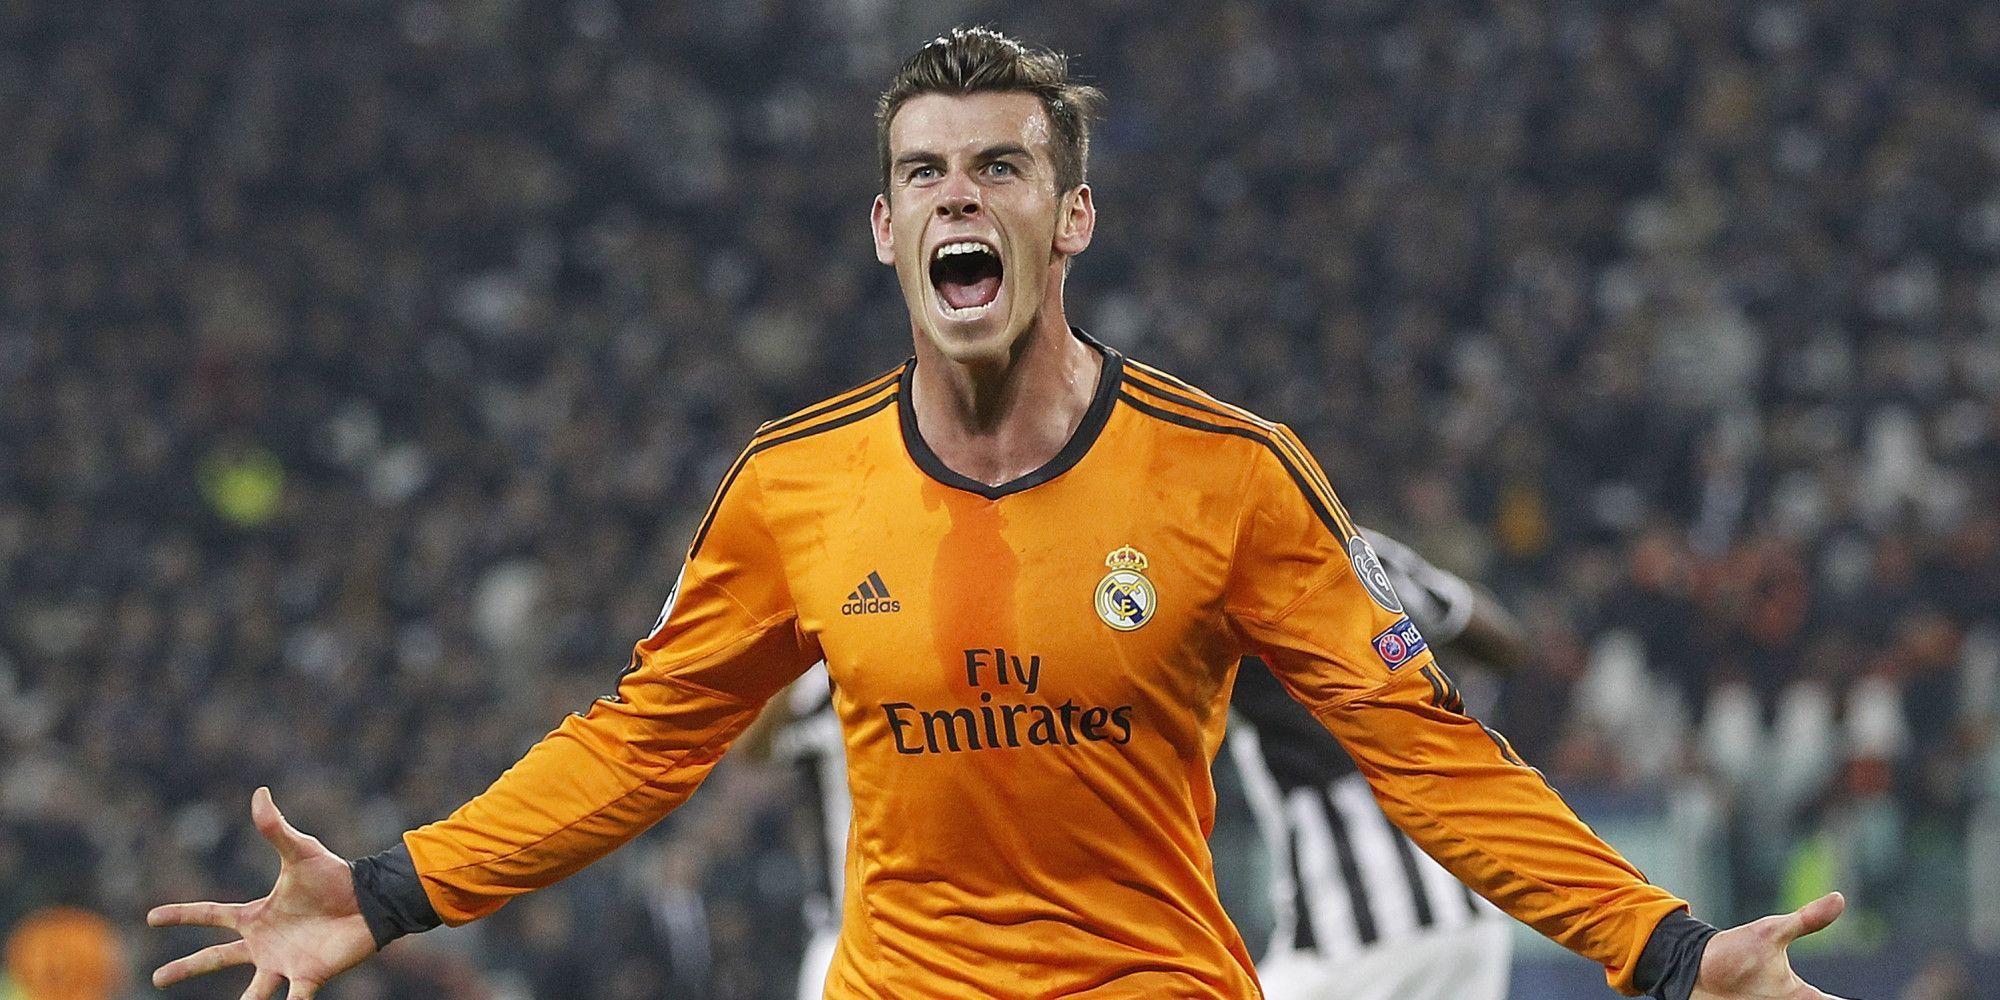 Gareth Bale Real Madrid Wallpaper 2014 HD. Download High Quality